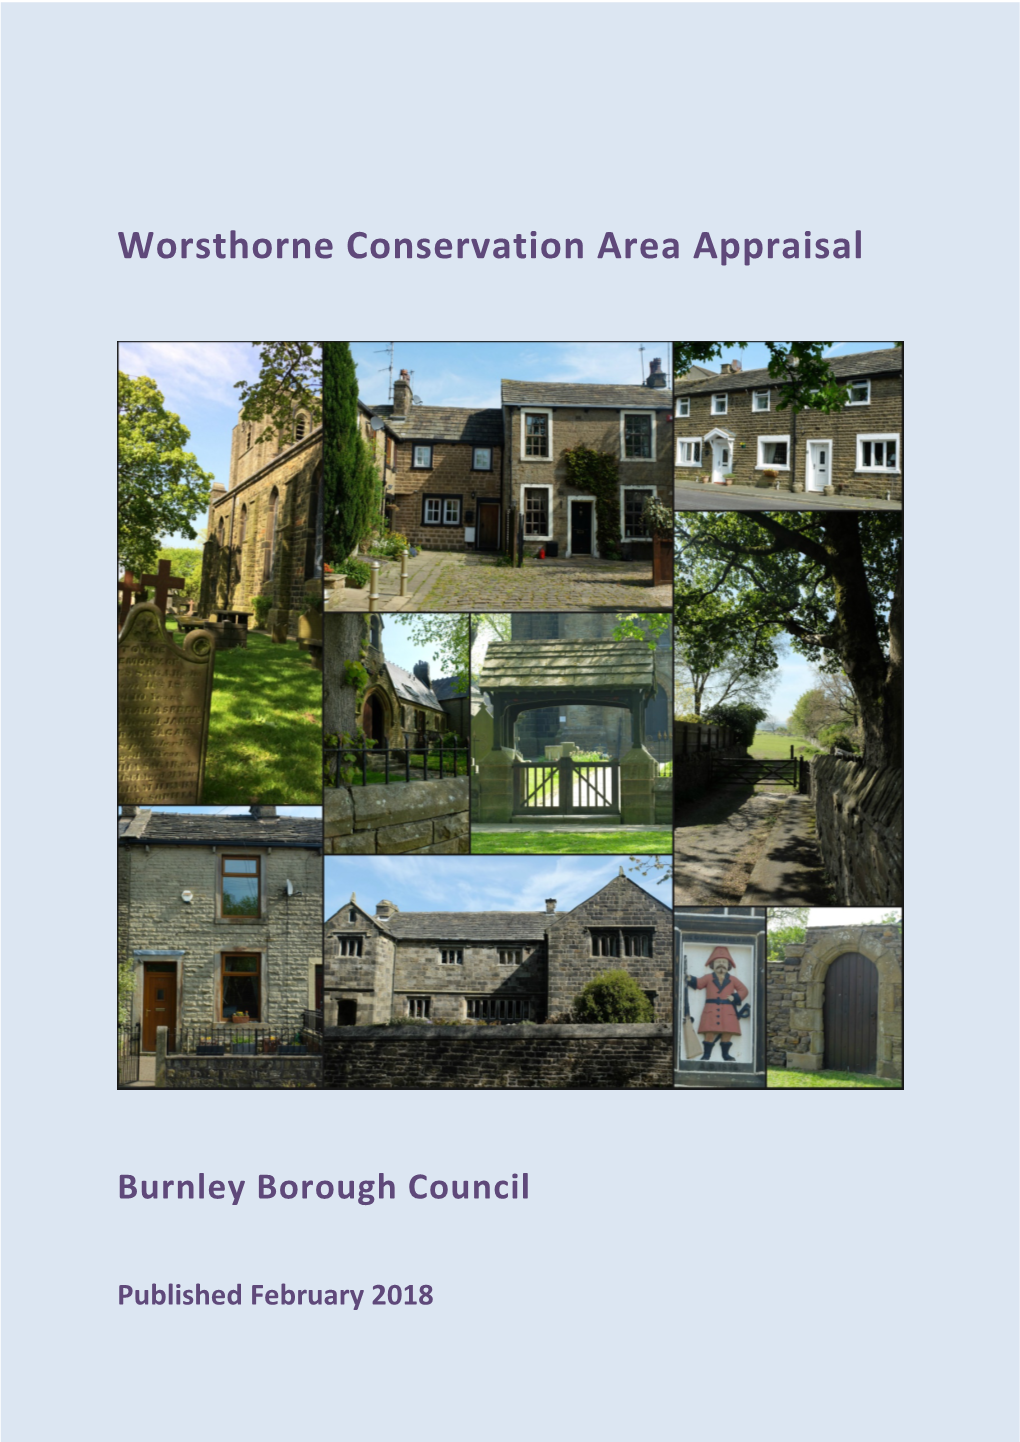 Worsthorne Conservation Area Appraisal February 2018